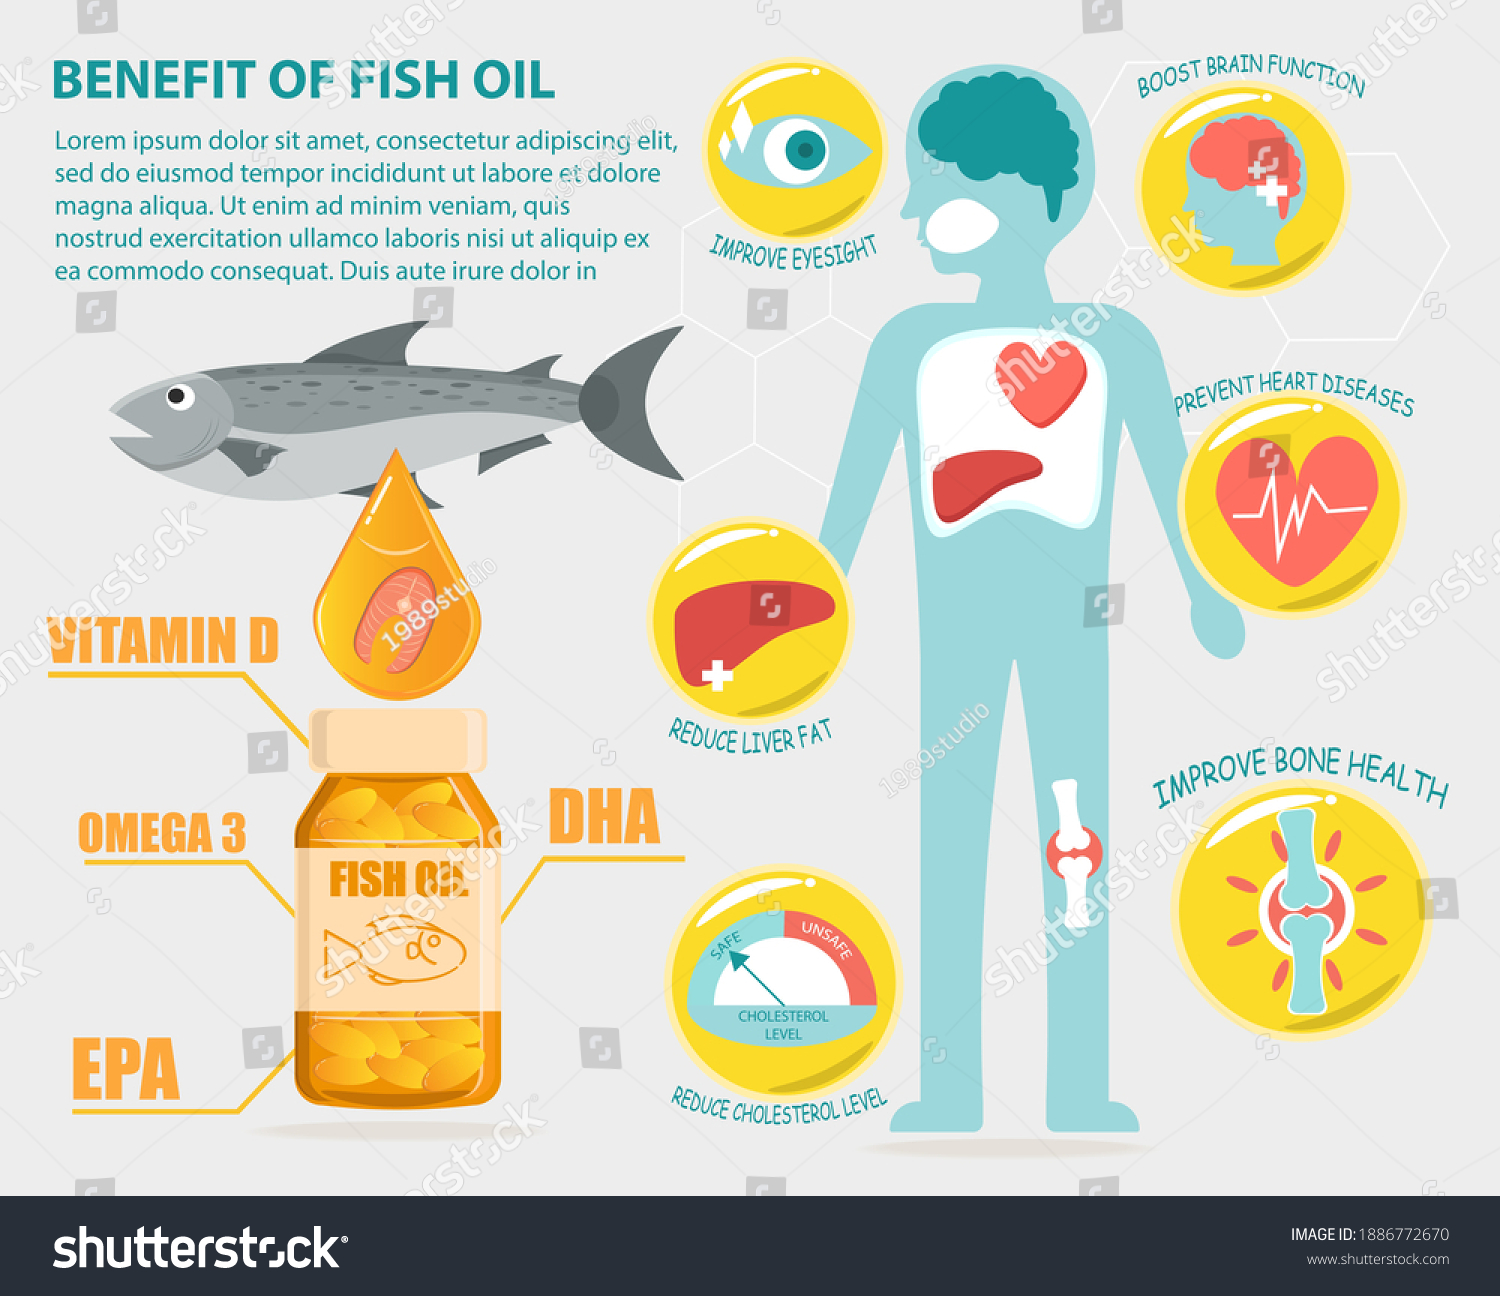 2,203 Benefits fish oil Images, Stock Photos & Vectors Shutterstock